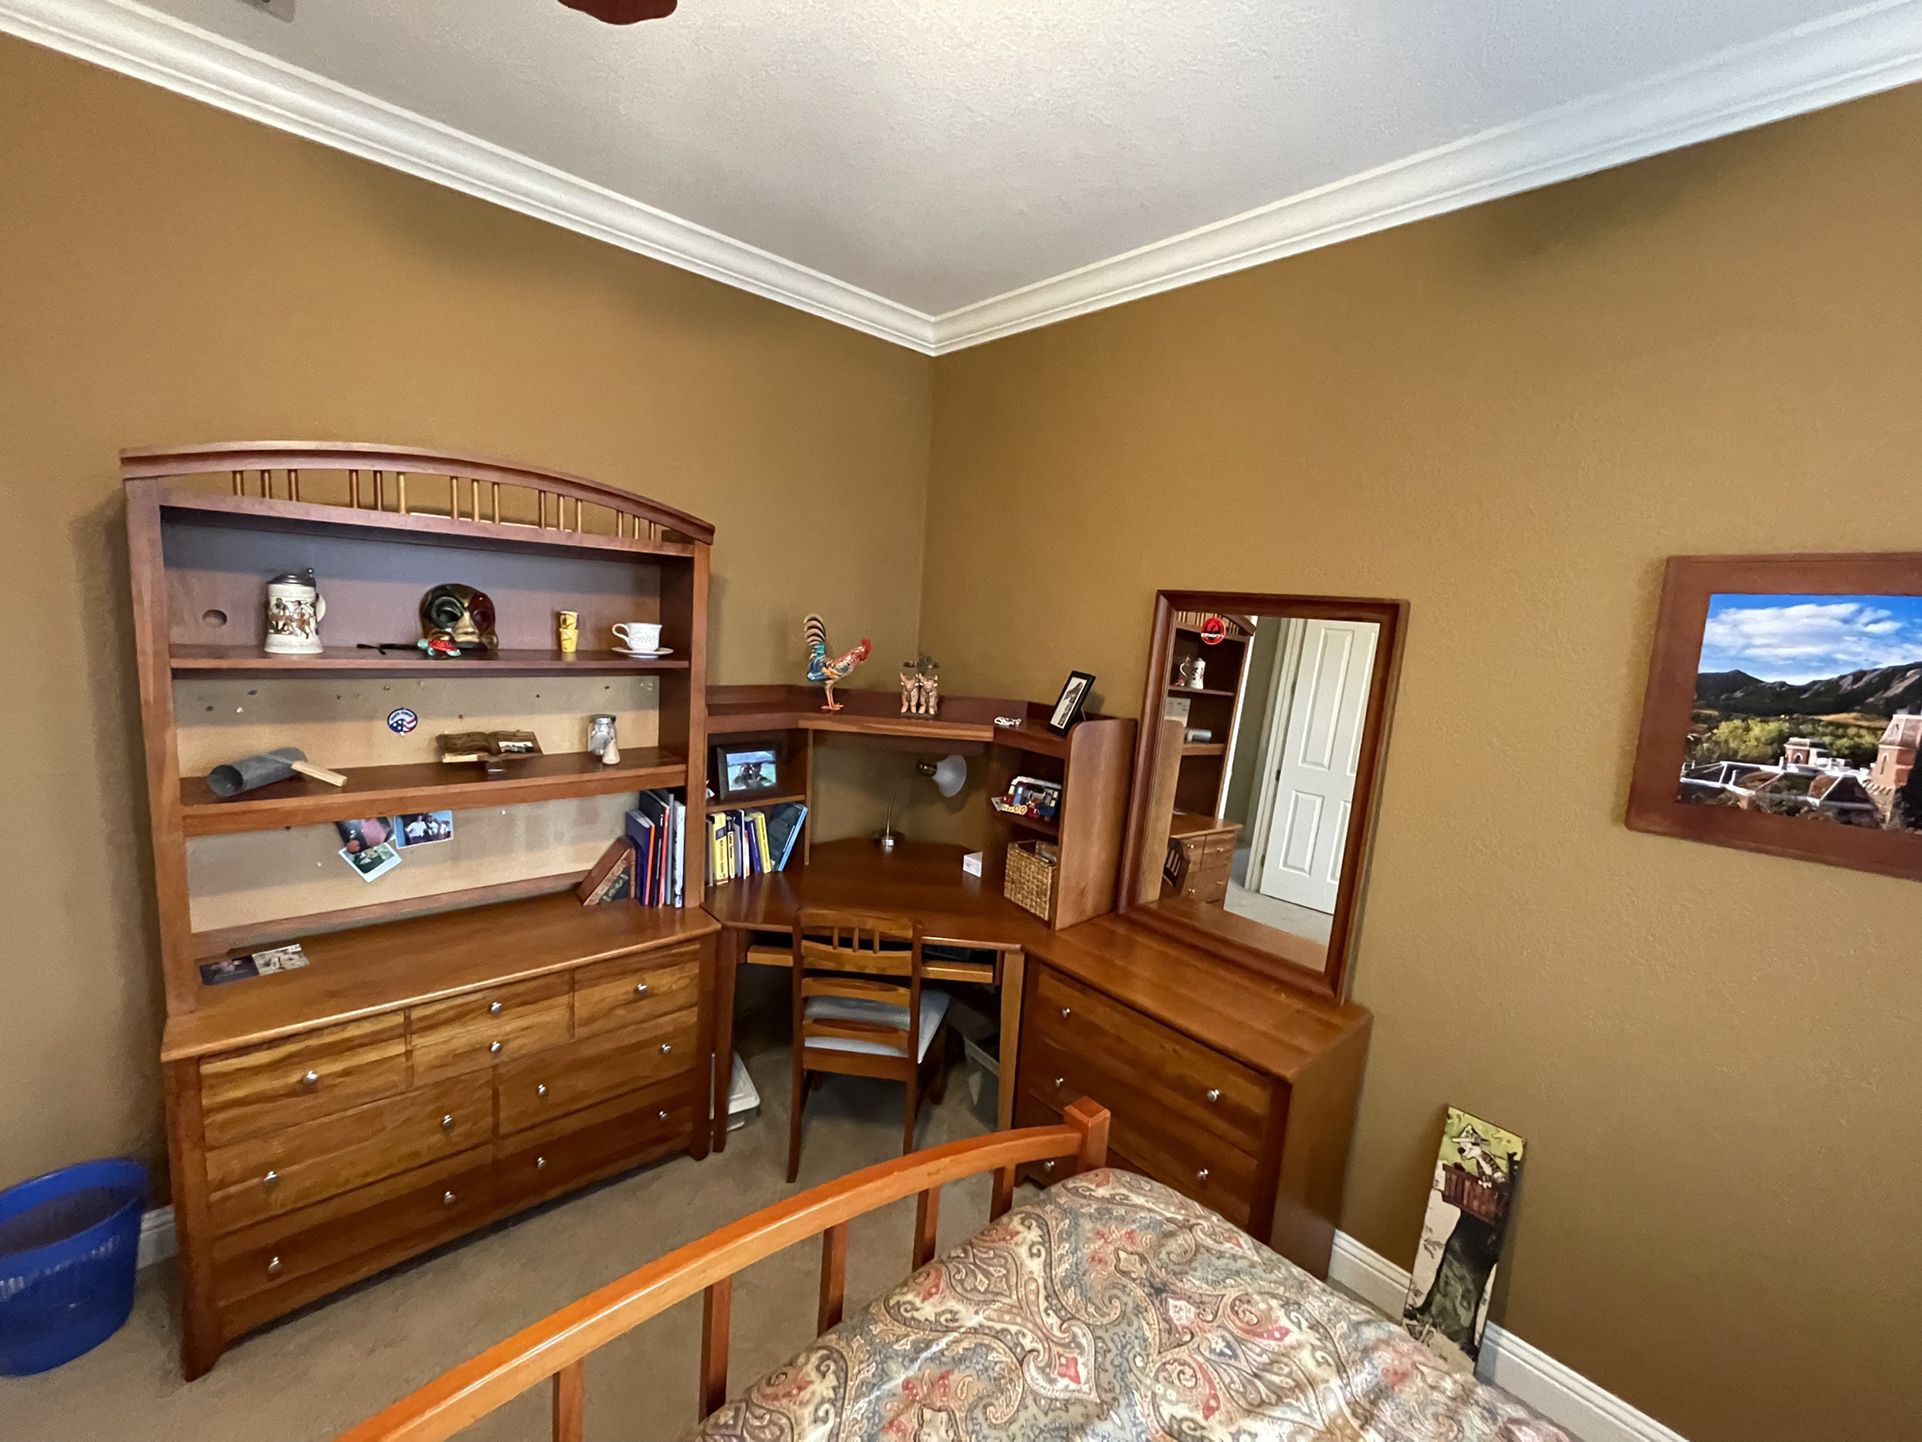 9 Piece Cherry Bedroom Set With Desk